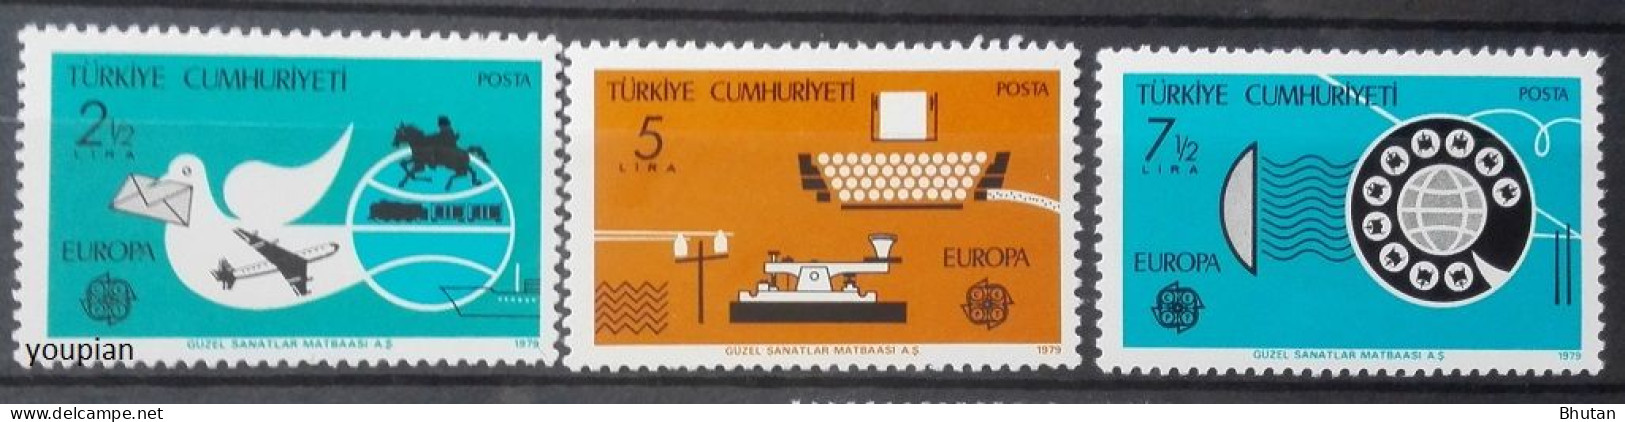 Türkiye 1979, Europa - Postal History, MNH Stamps Set - Ongebruikt